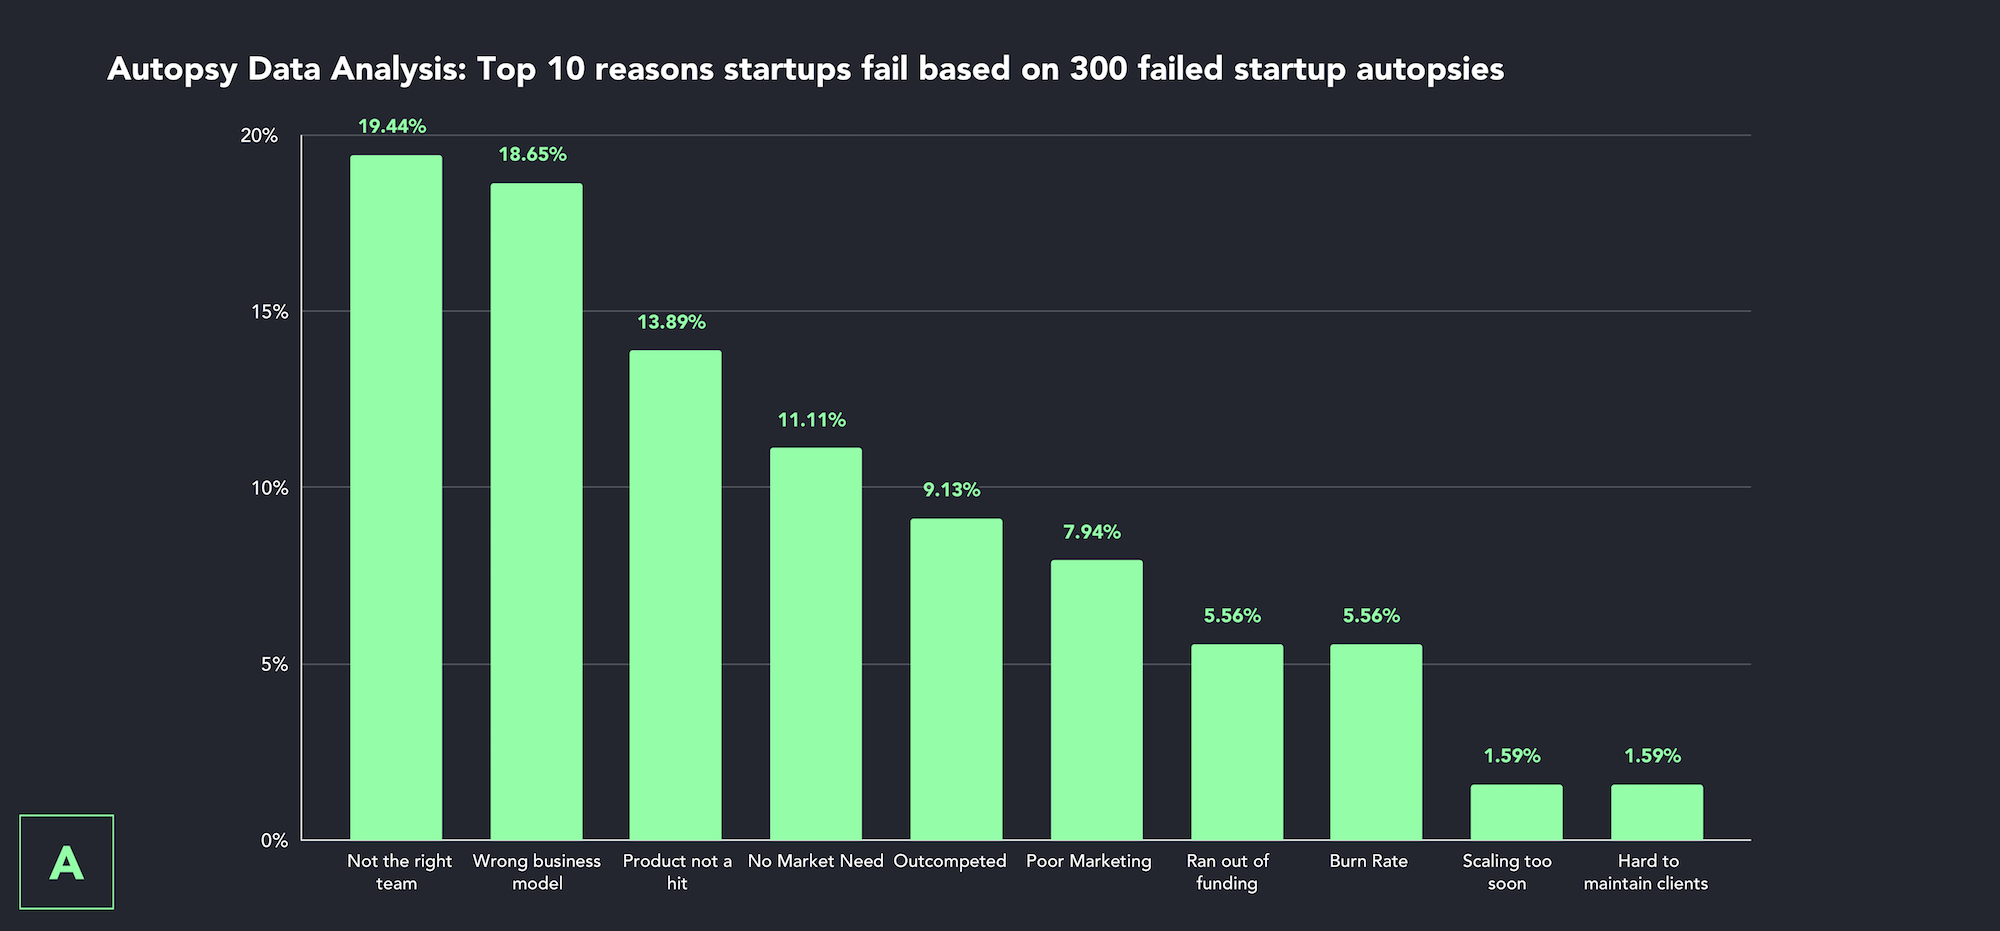 Top 10 reasons for failure based on 300 failed startups via Autopsy